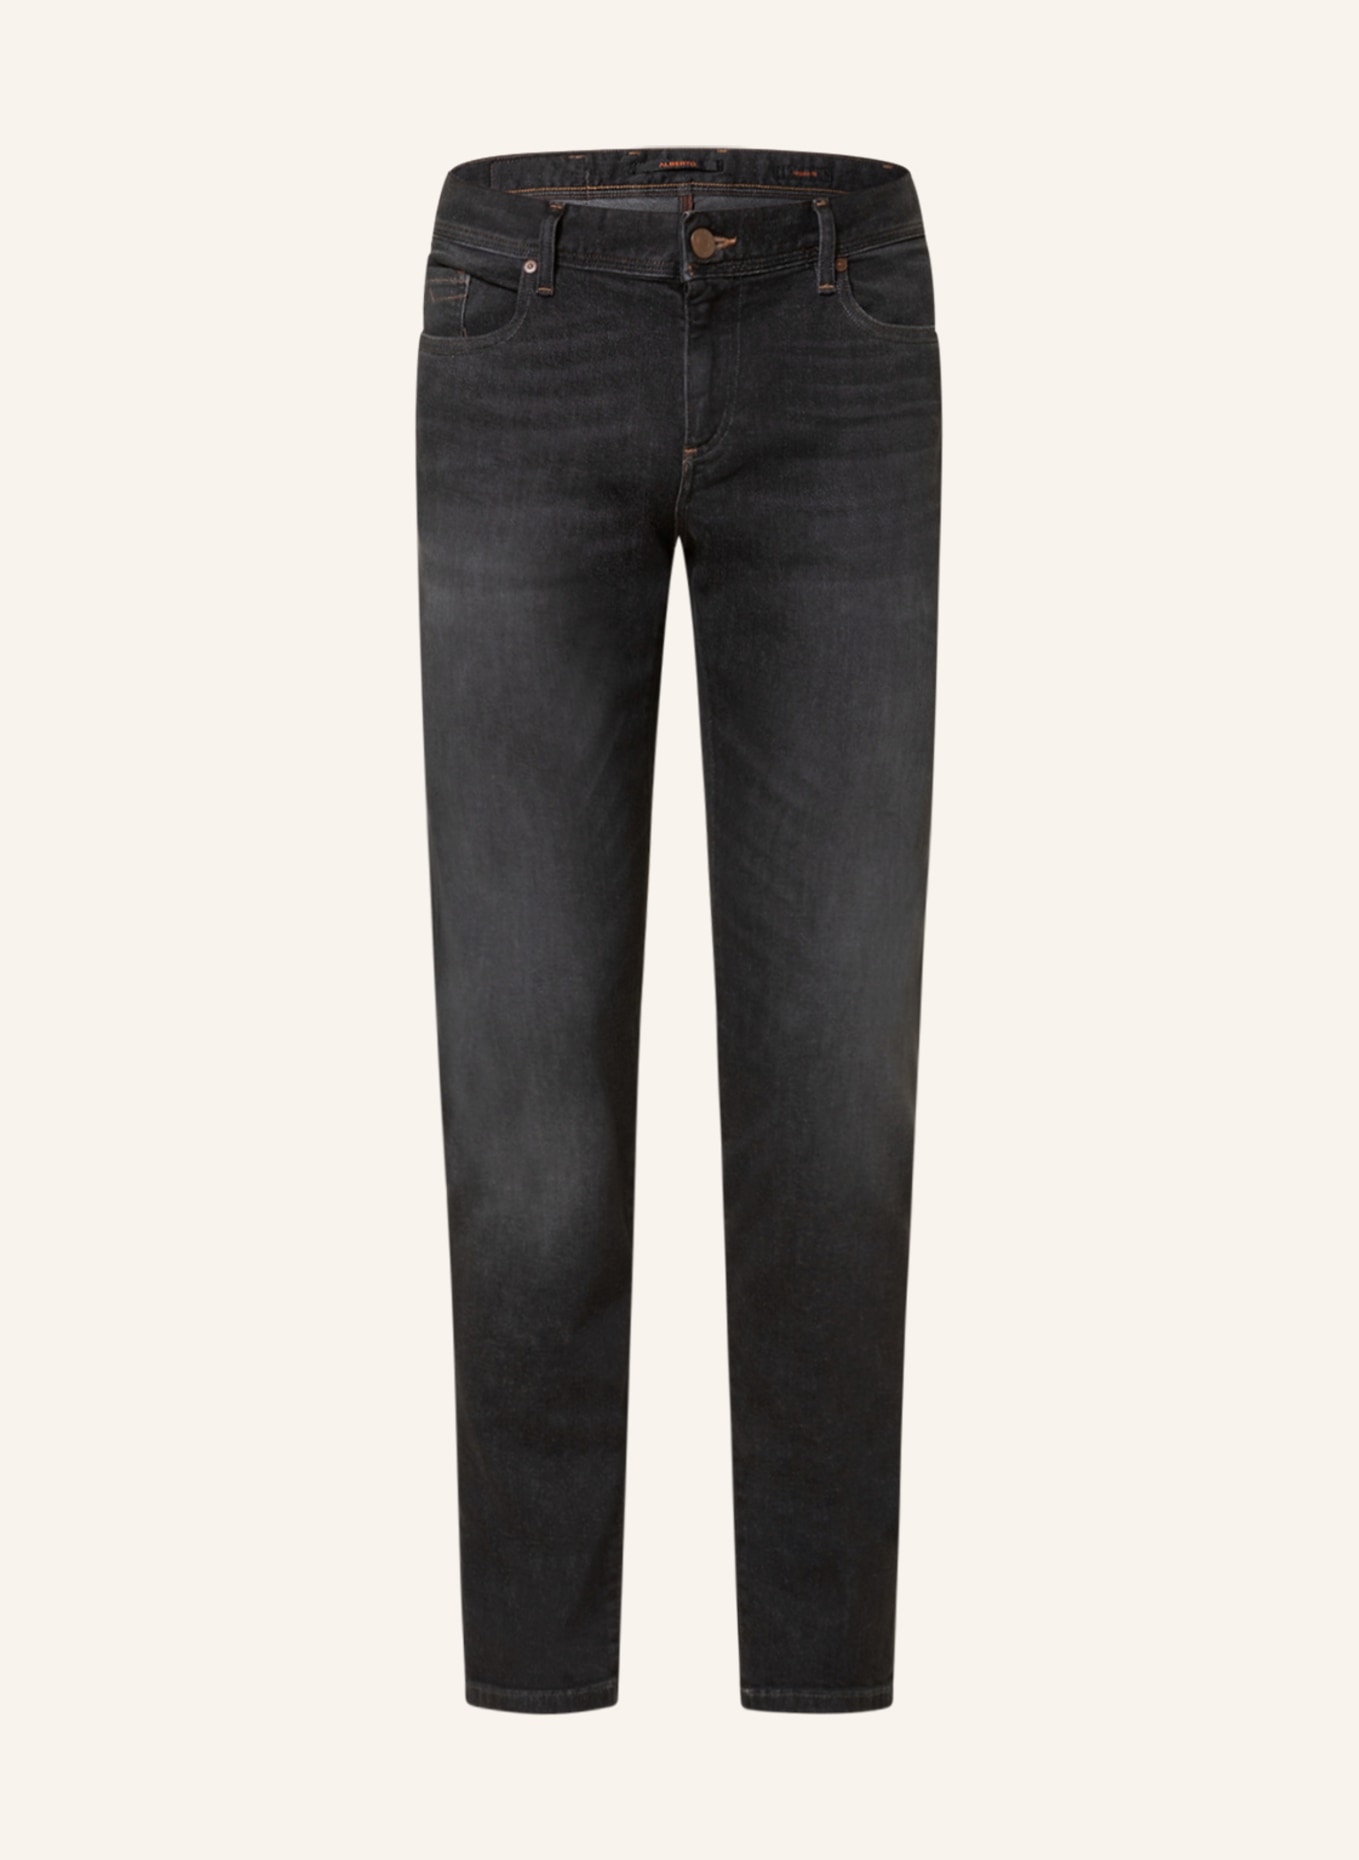 ALBERTO Jeans PIPE Regular Fit, Farbe: 980 (Bild 1)